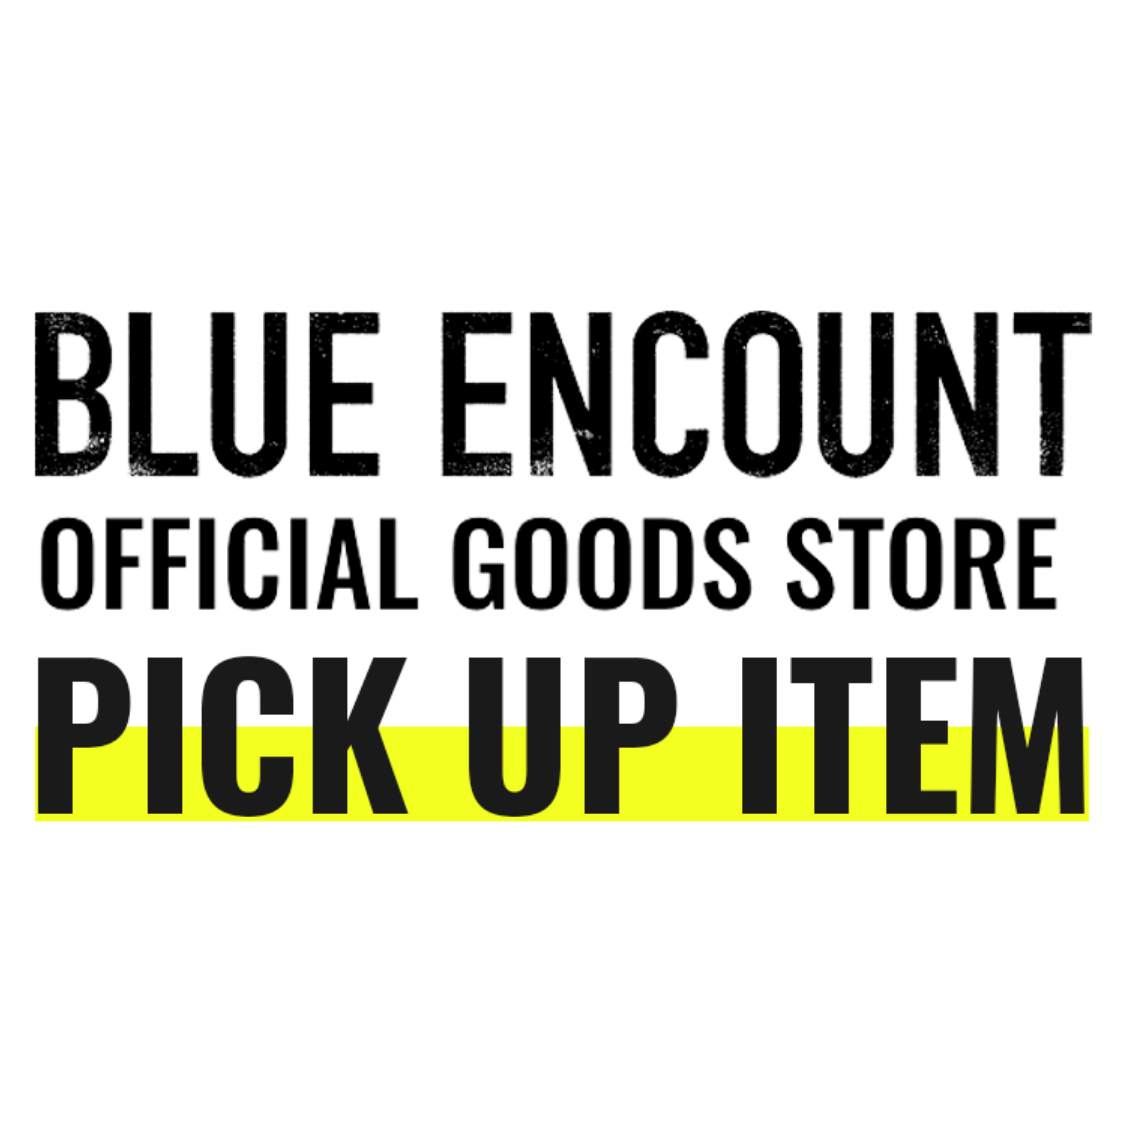 Blue Encount Official Goods Store